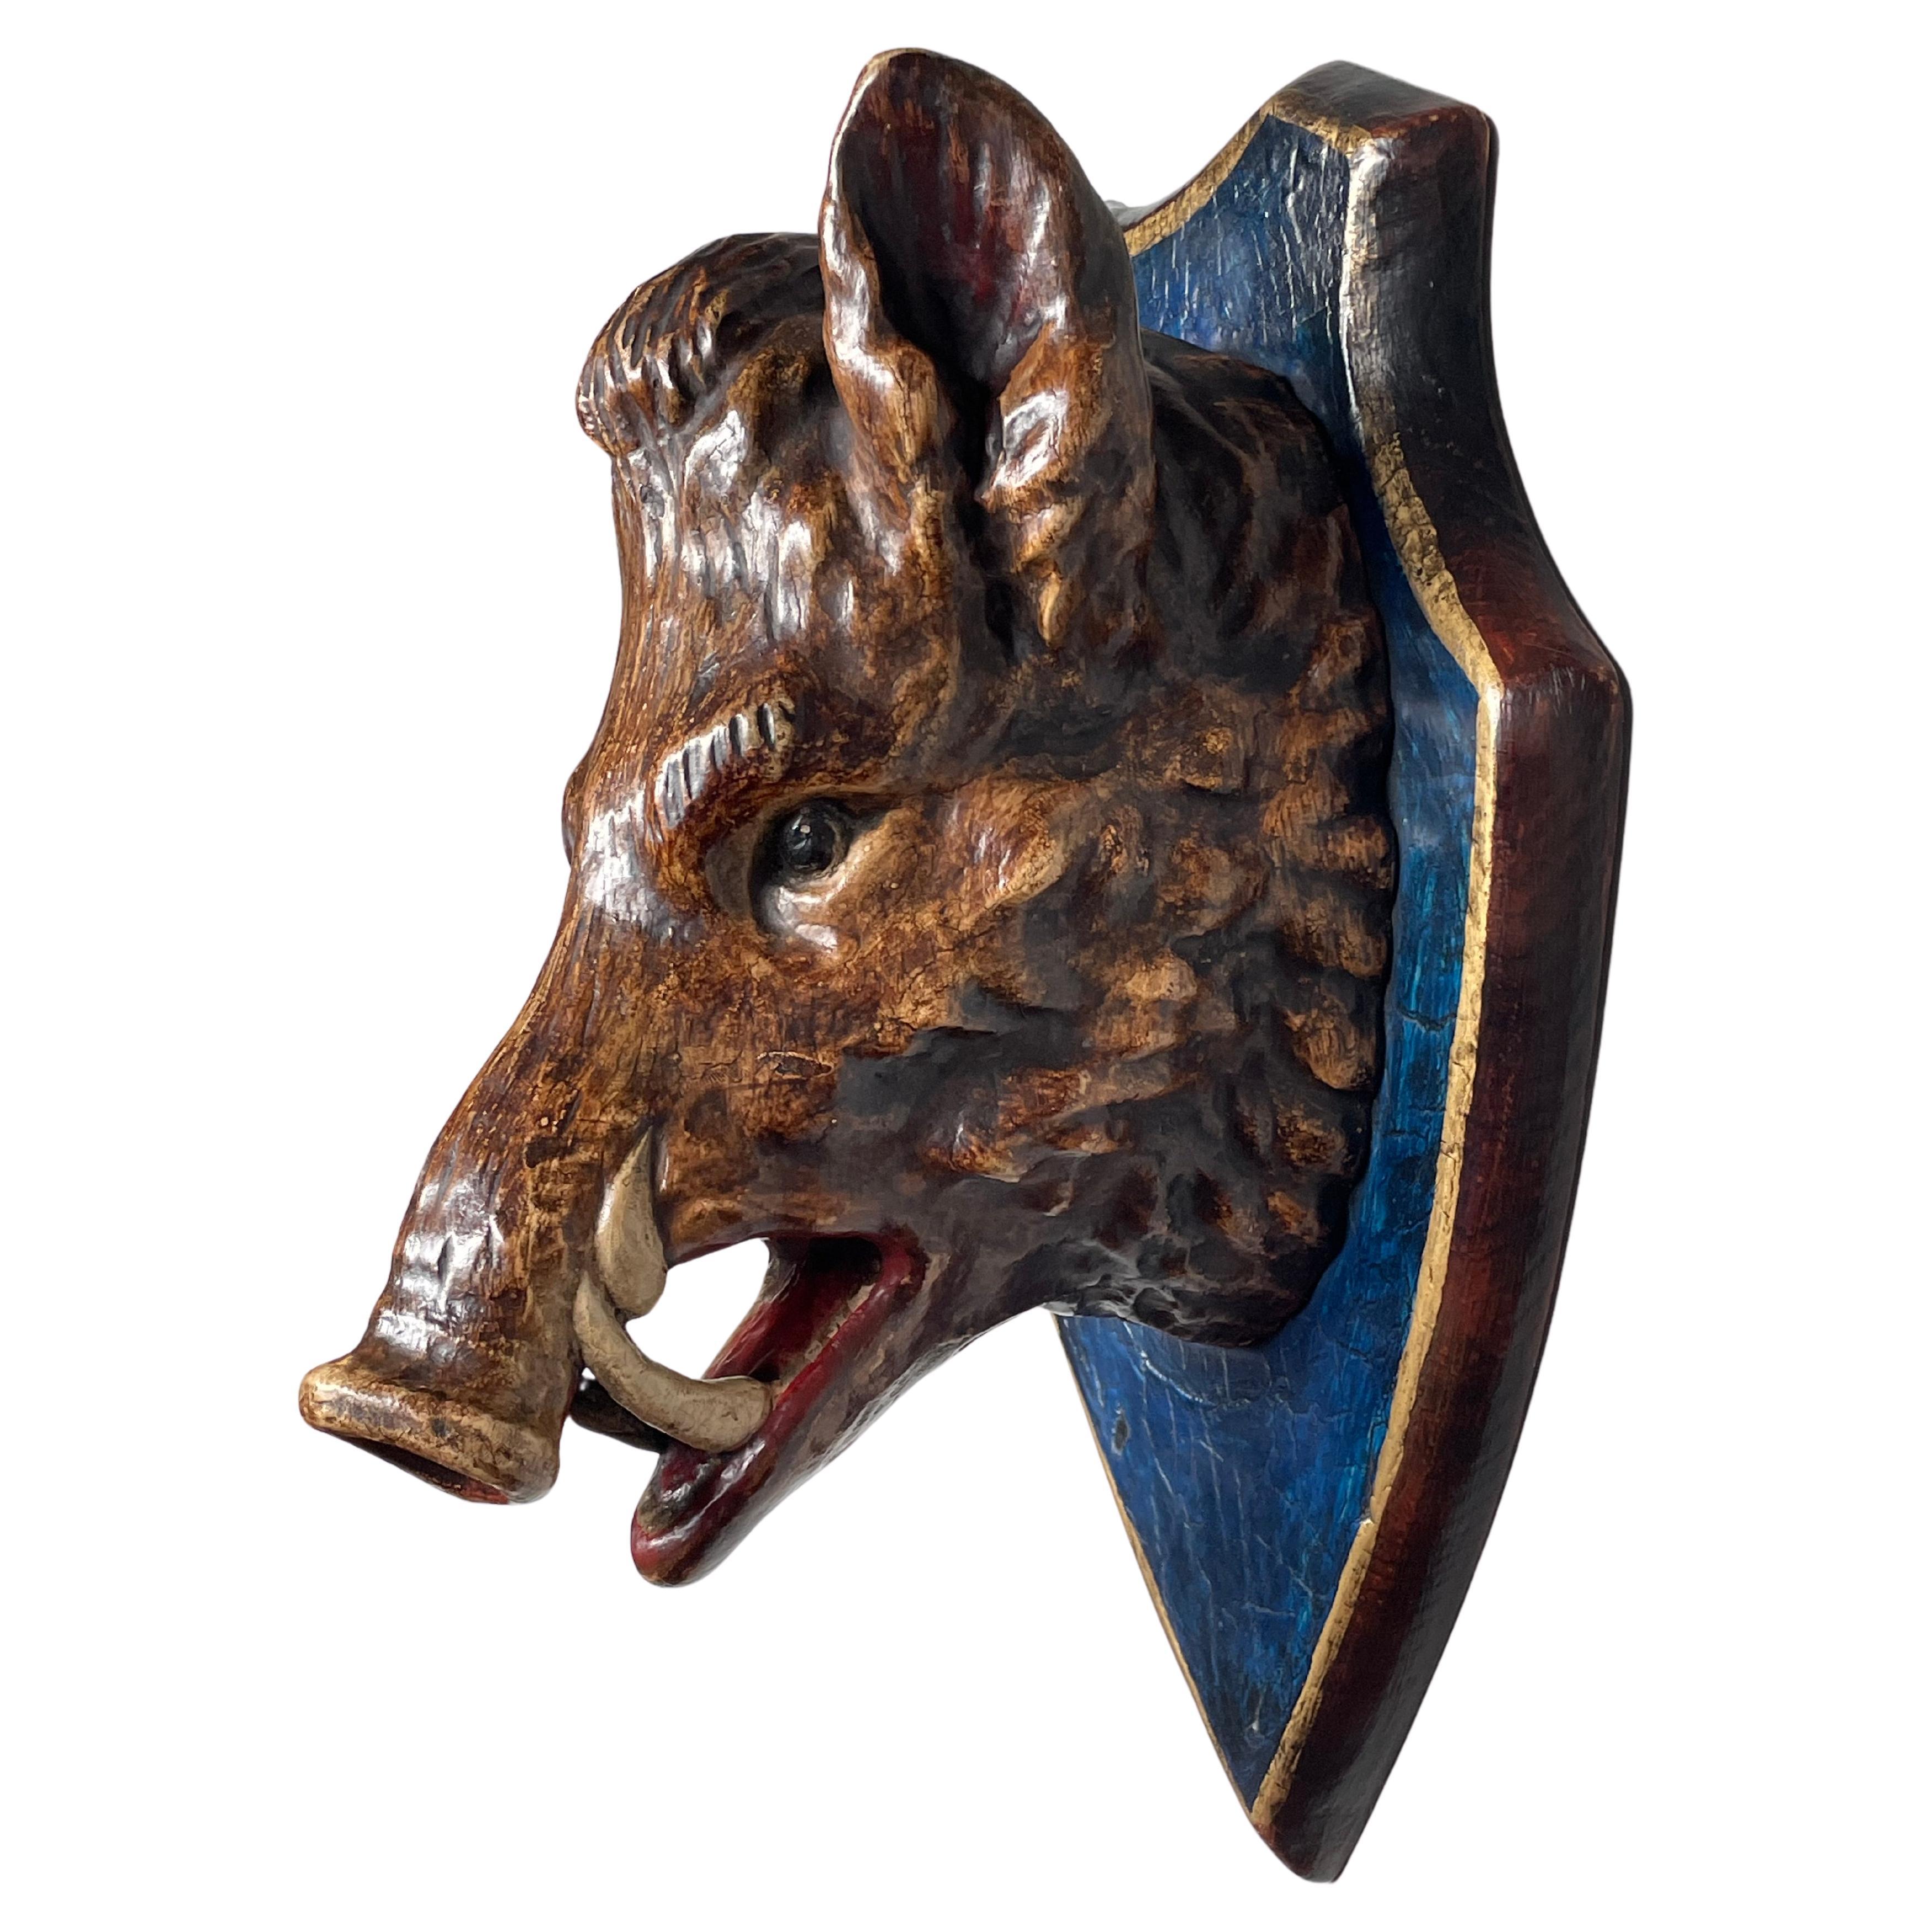 Finest Quality Antique Hand Carved & Painted Black Forest Boar / Hog Sculpture